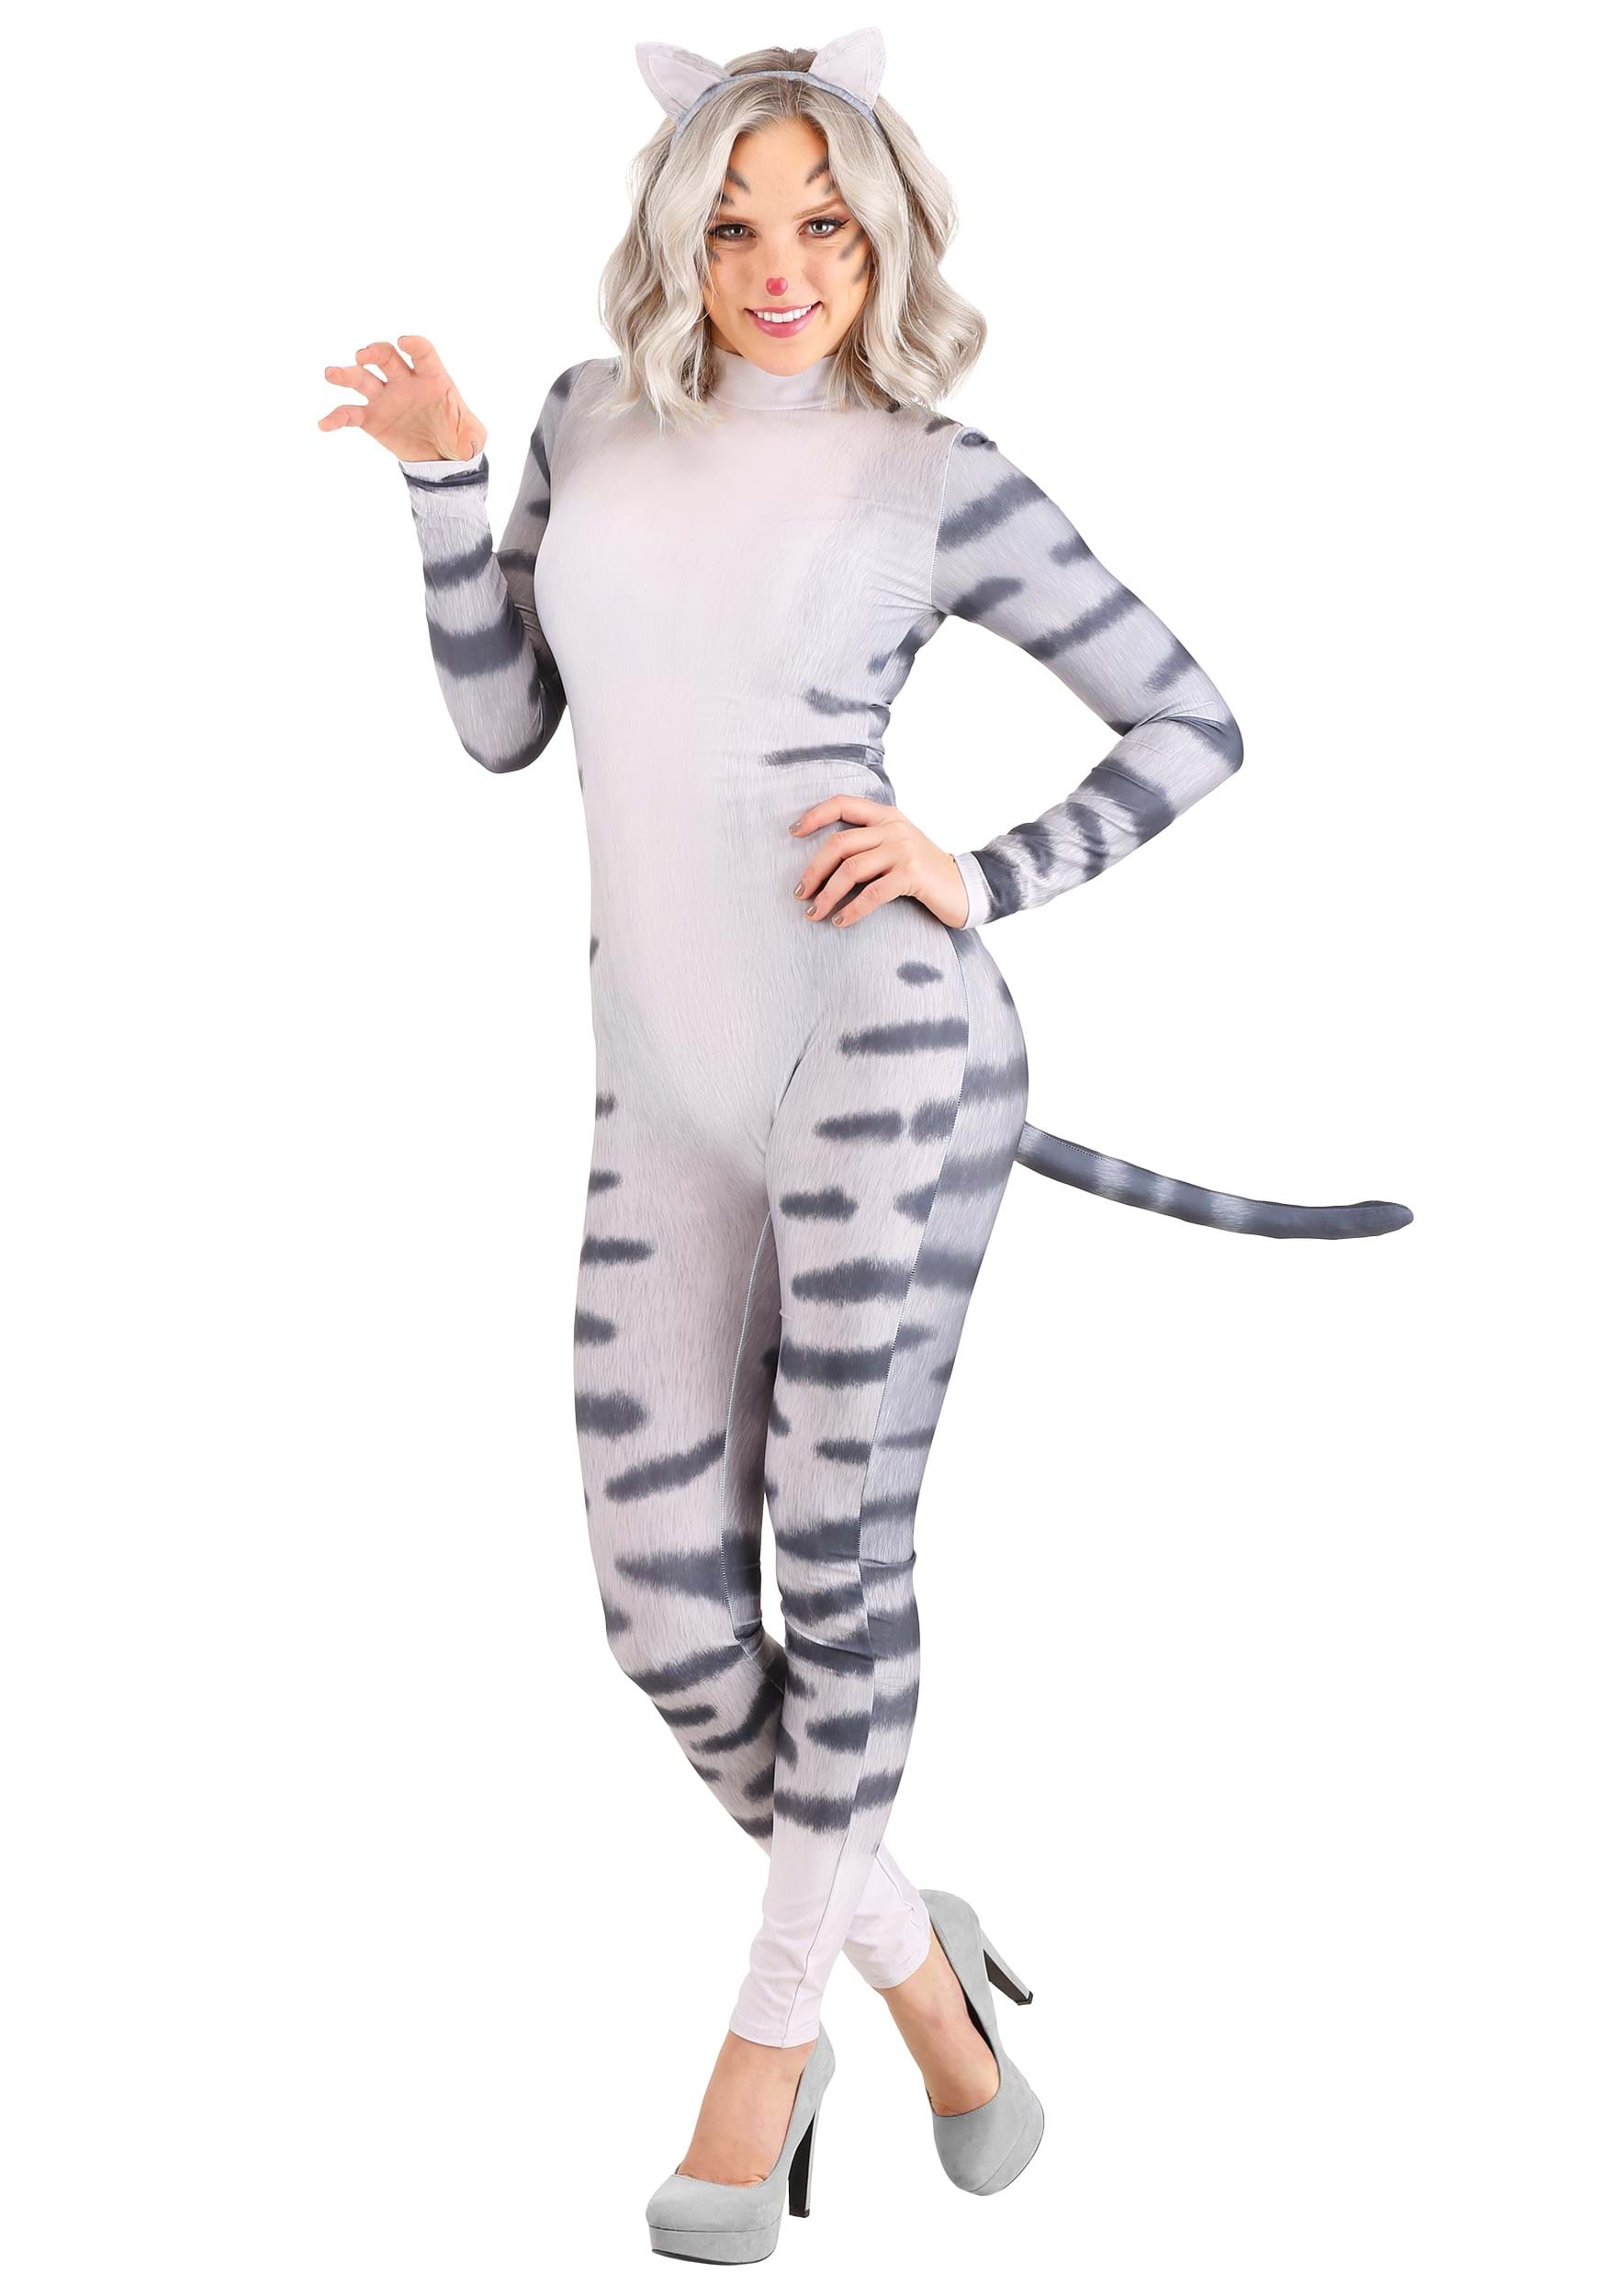 Photos - Fancy Dress CATerpillar FUN Costumes Women's Nimble Tabby Cat Costume Gray 